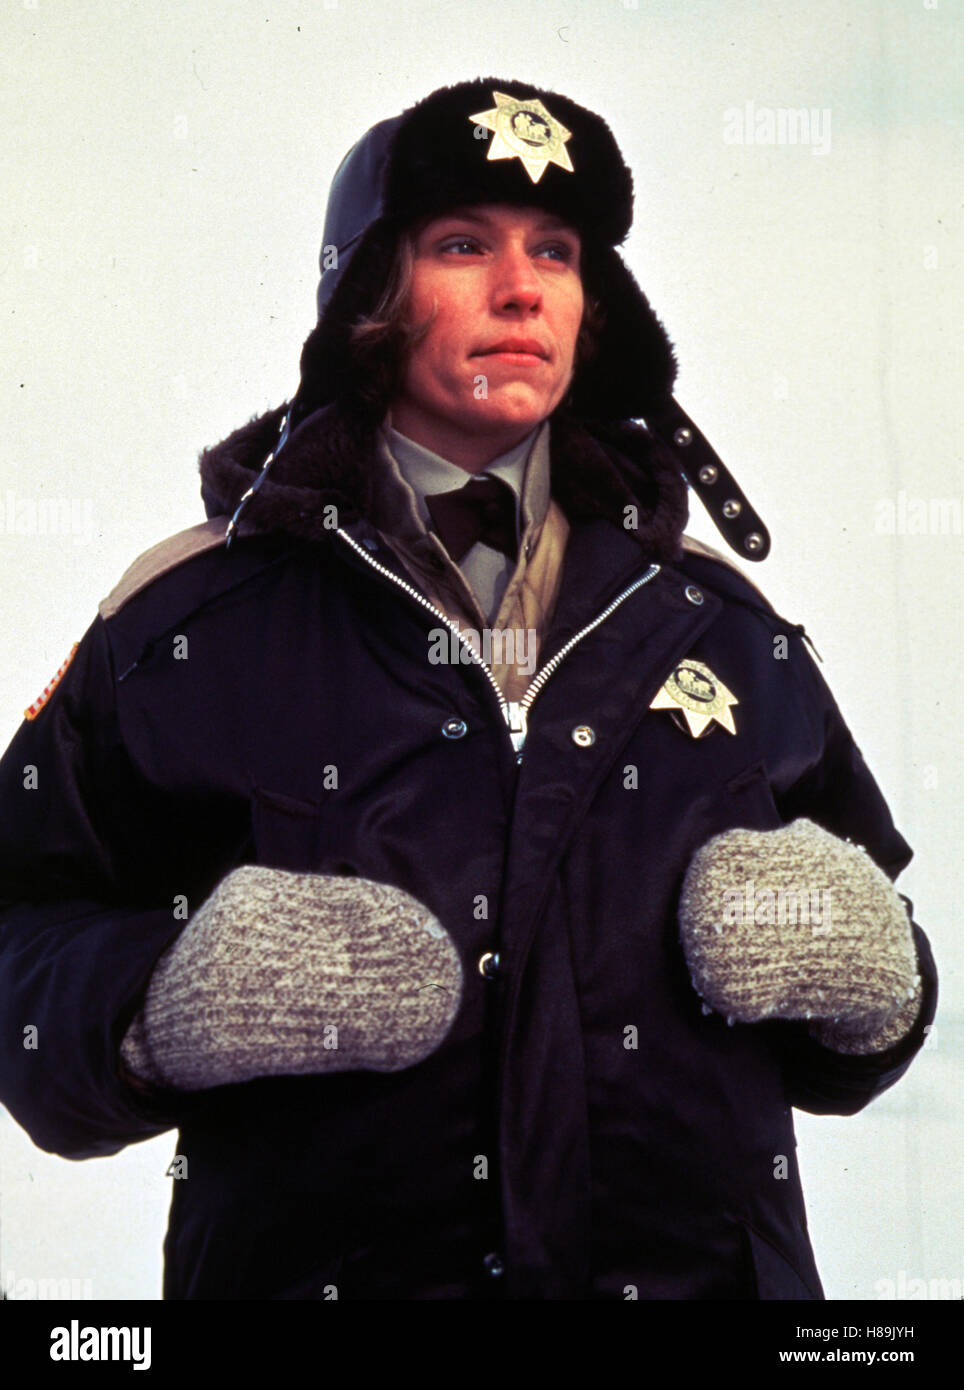 Fargo - Blutiger Schnee, (FARGO) USA 1996, Regie: Joel Coen, FRANCES McDORMAND, Stichwort: Polizeiuniform, Handschuhe Stock Photo